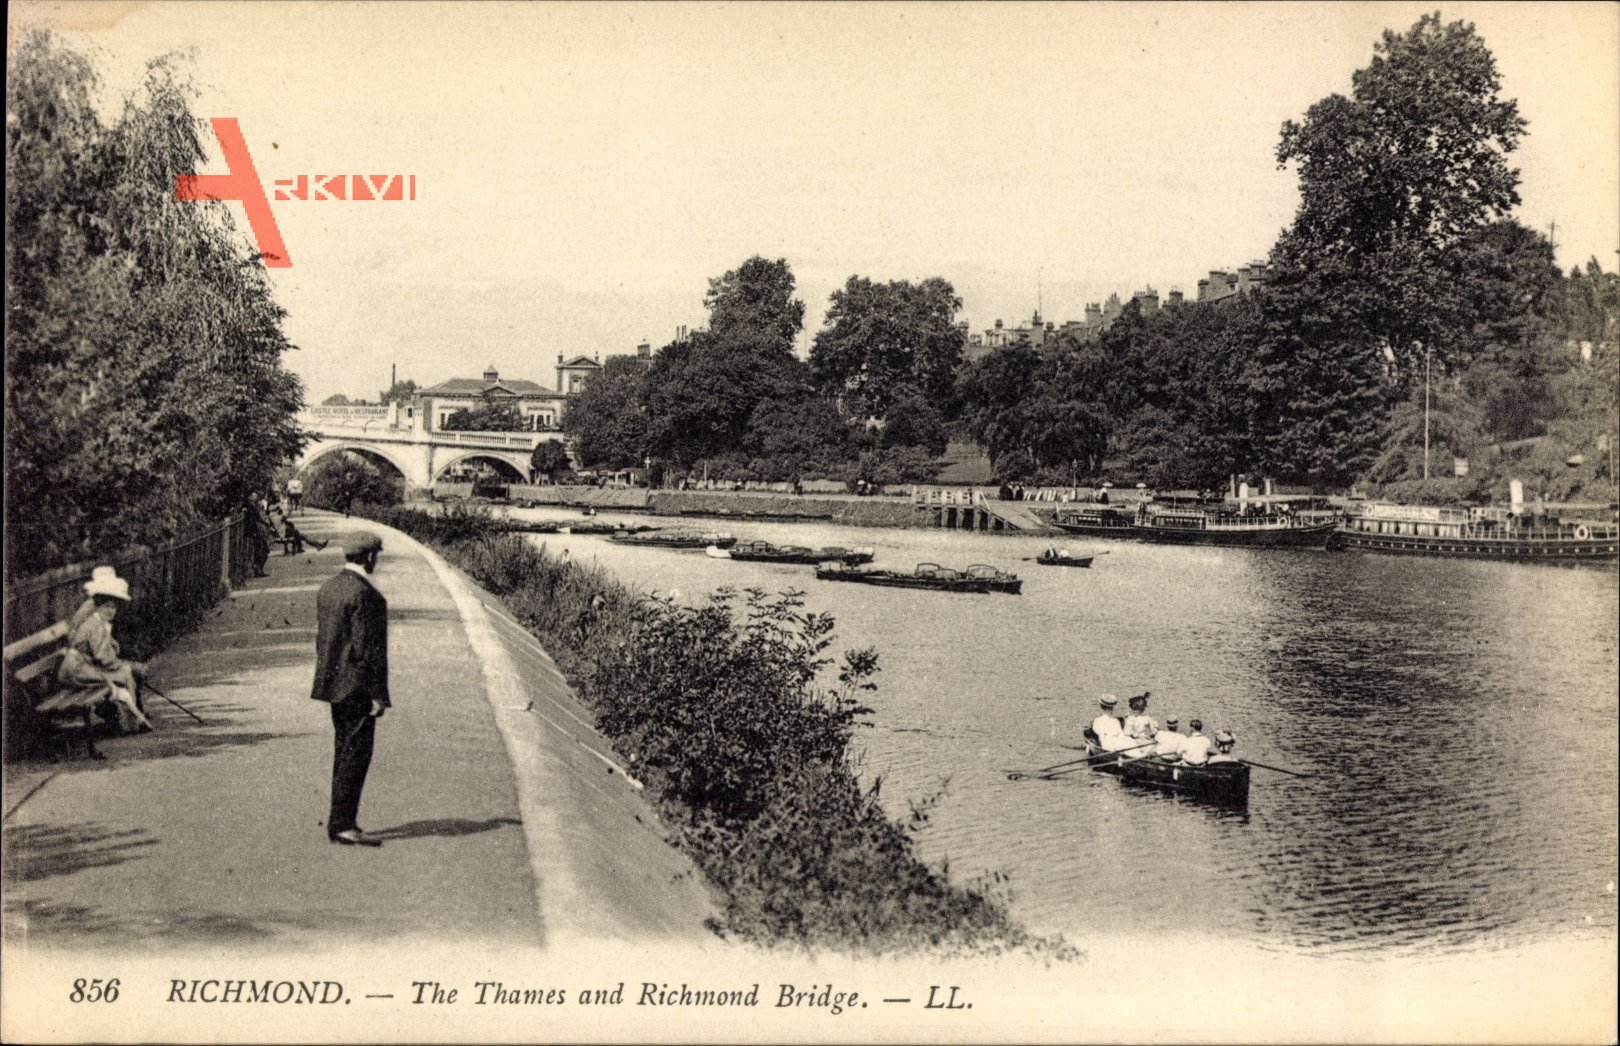 Richmond London, The Thames and Richmond Bridge, Ruderer